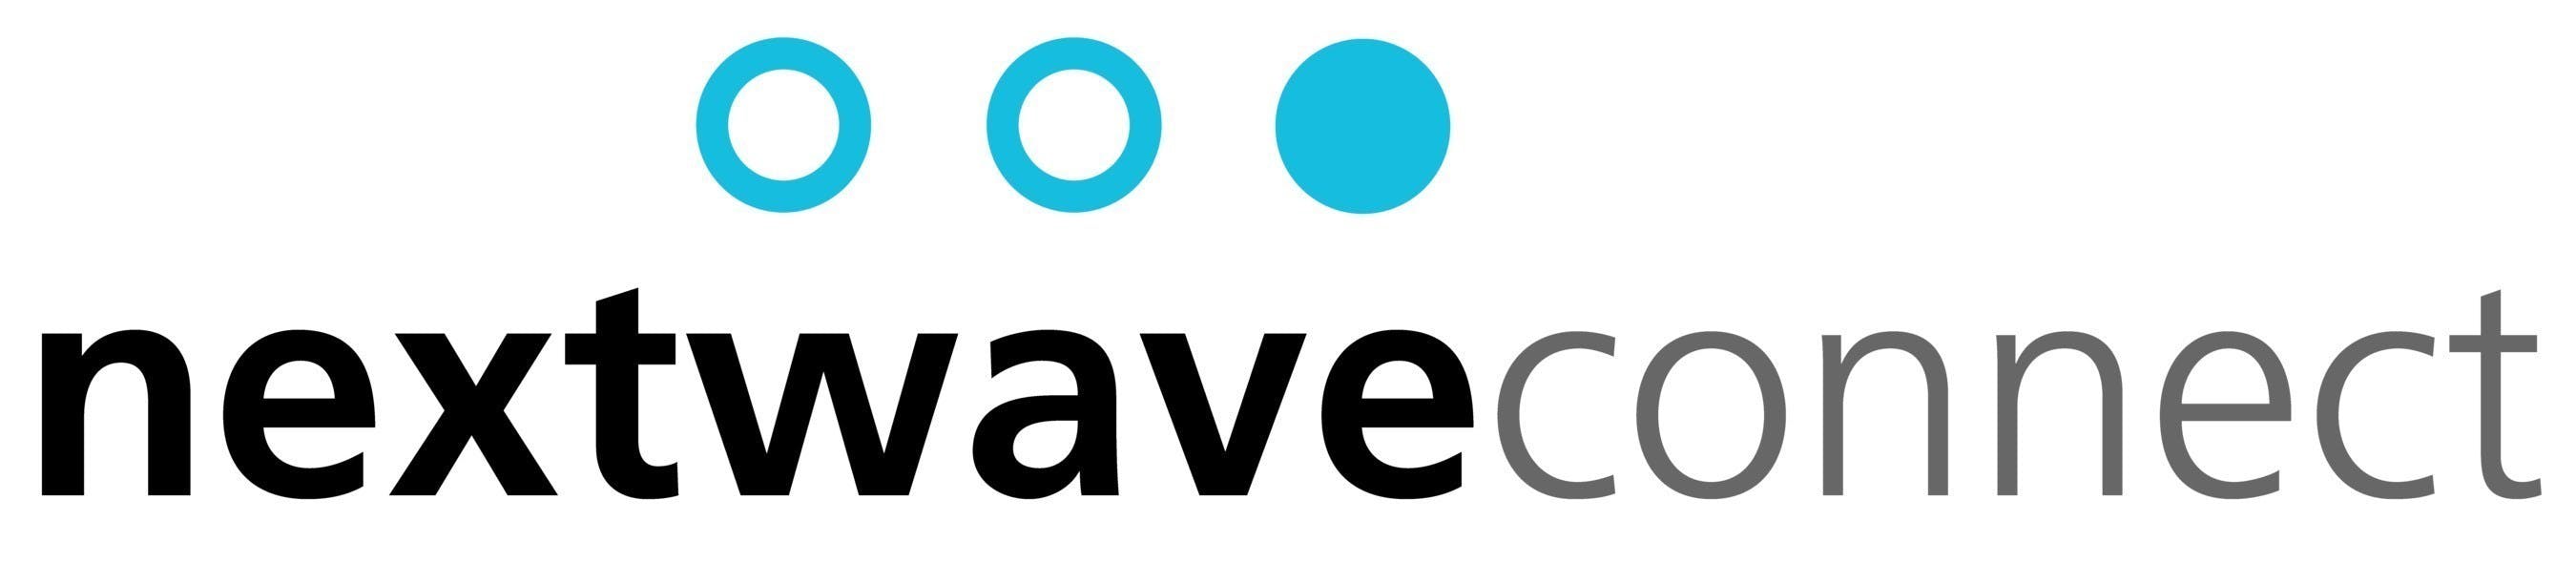 NextWave Connect logo